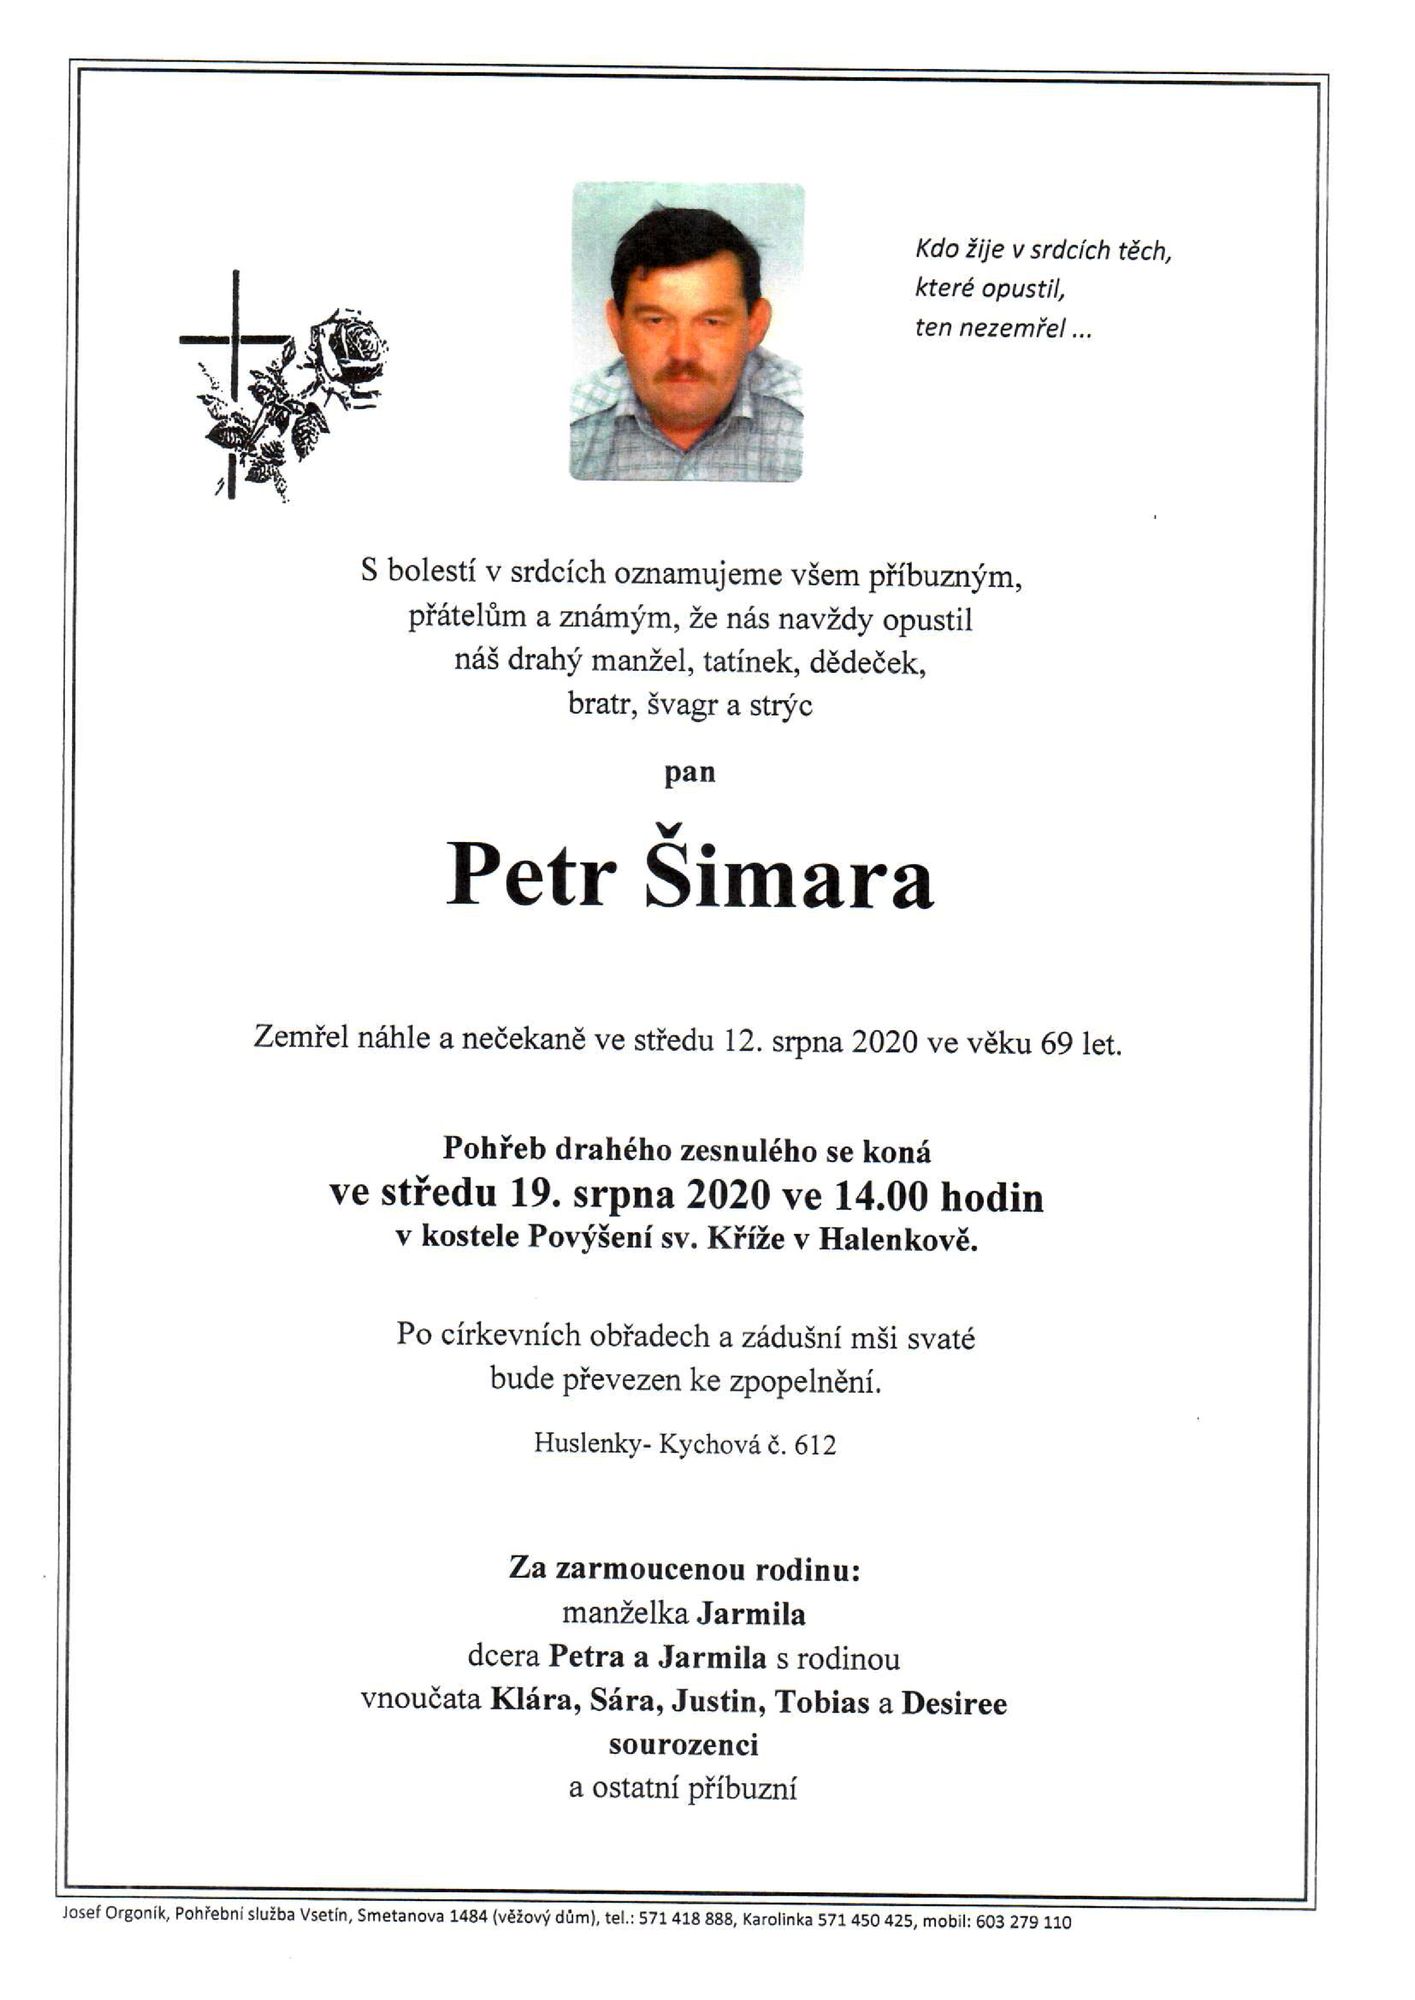 Petr Šimara